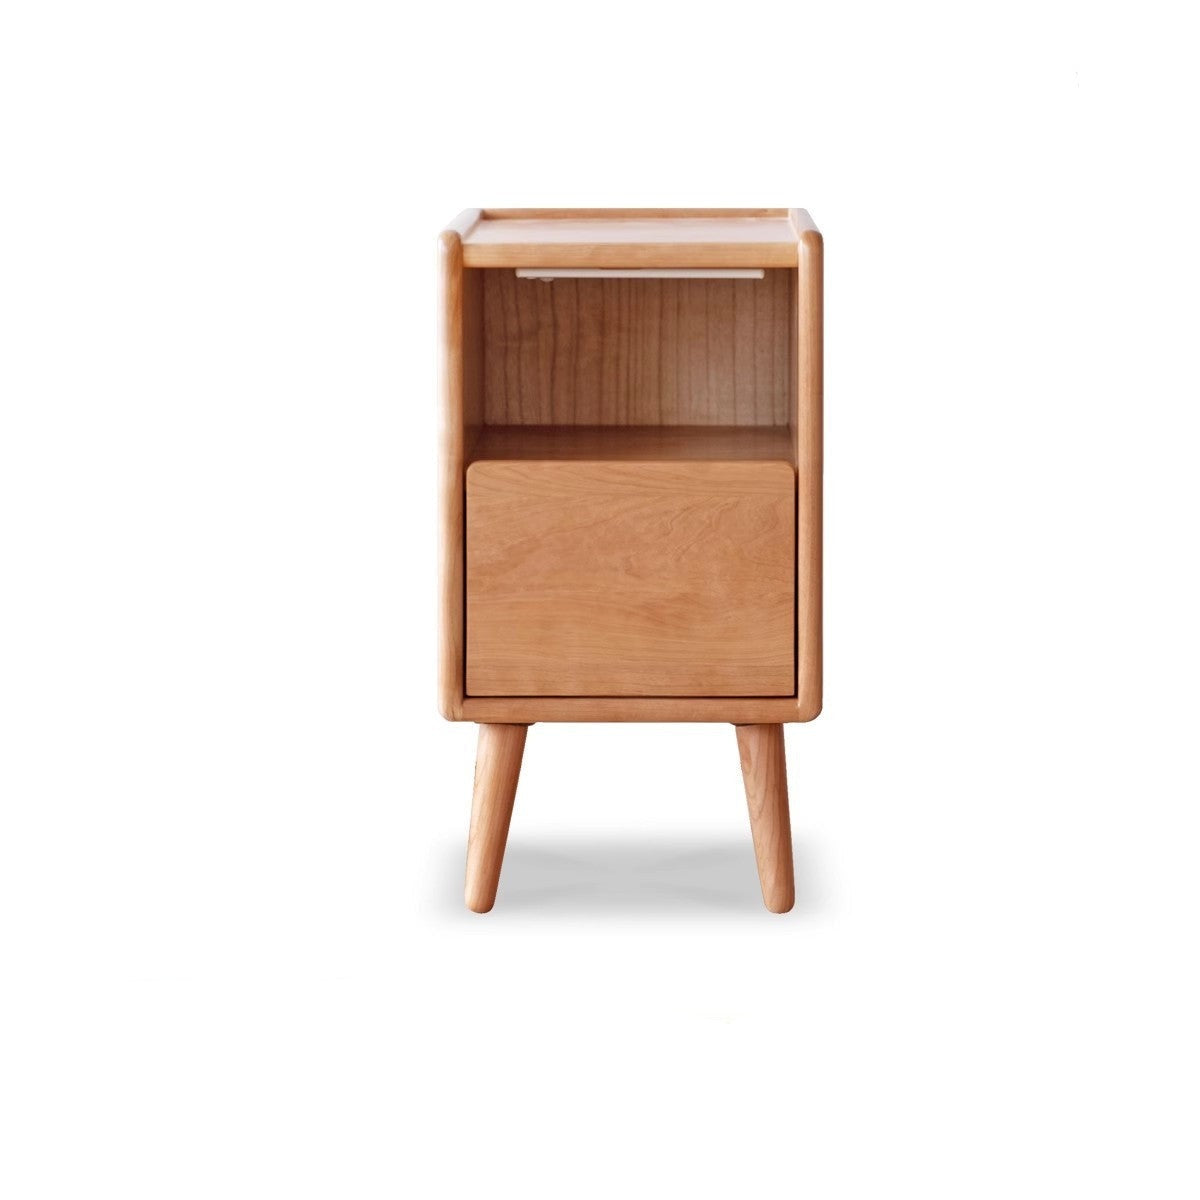 Cherry wood ultra-narrow nightstand with light-